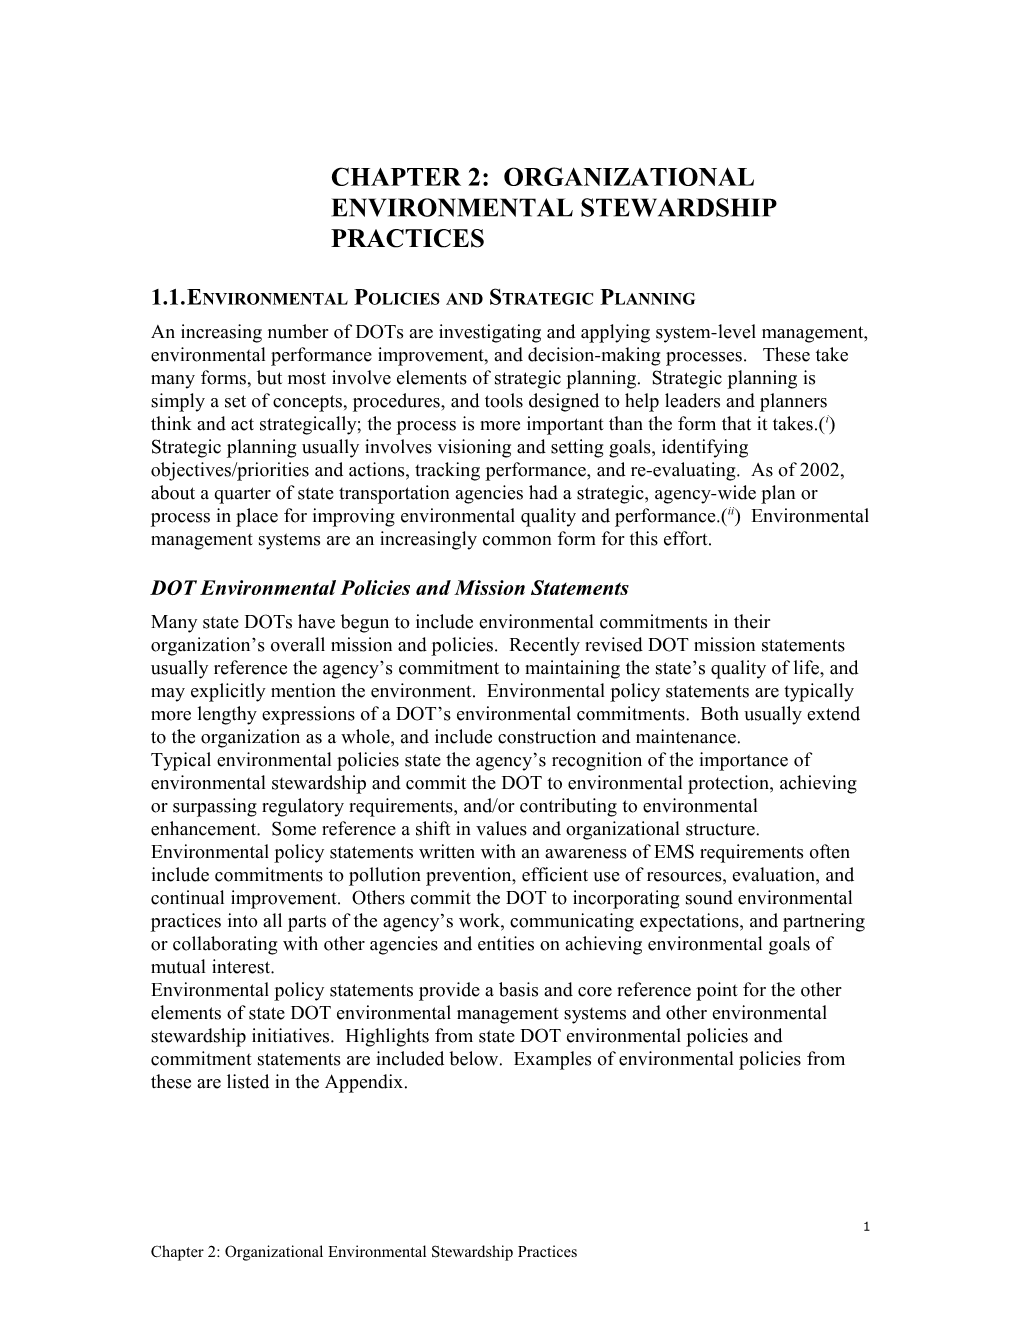 CHAPTER 2: Organizational Environmental Stewardship Practices